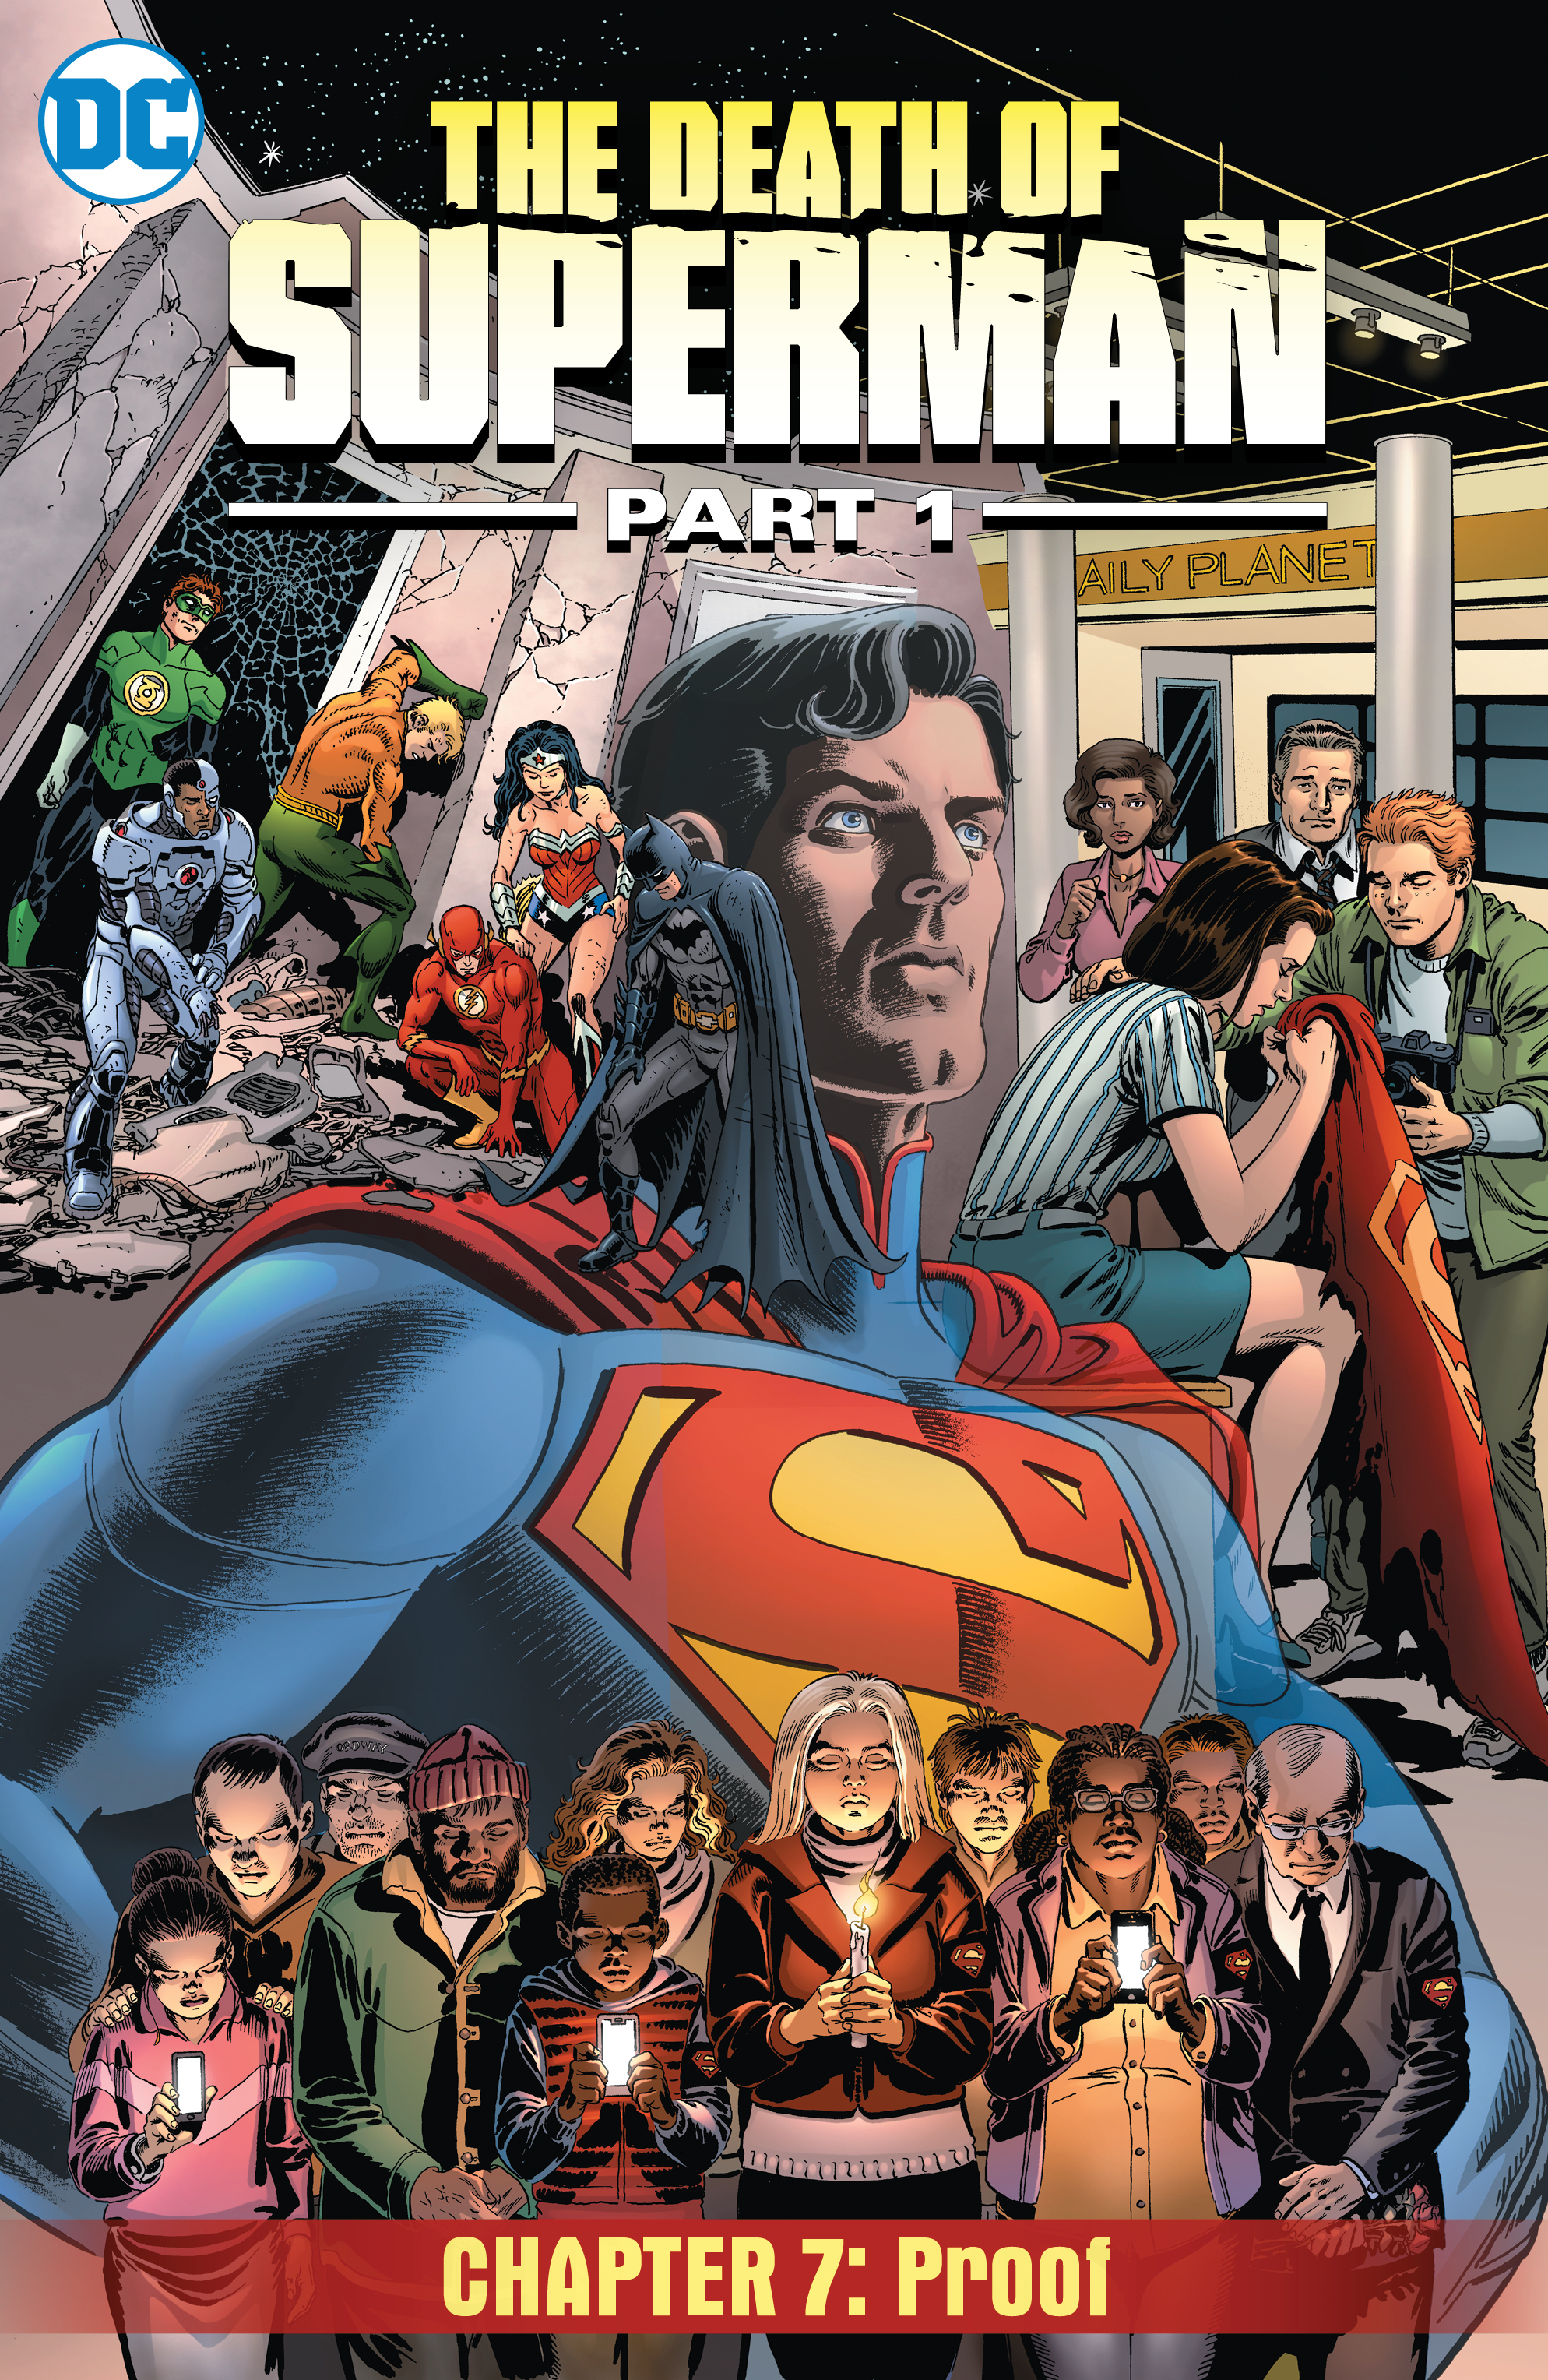 Death of Superman, Part 1 #7 preview images